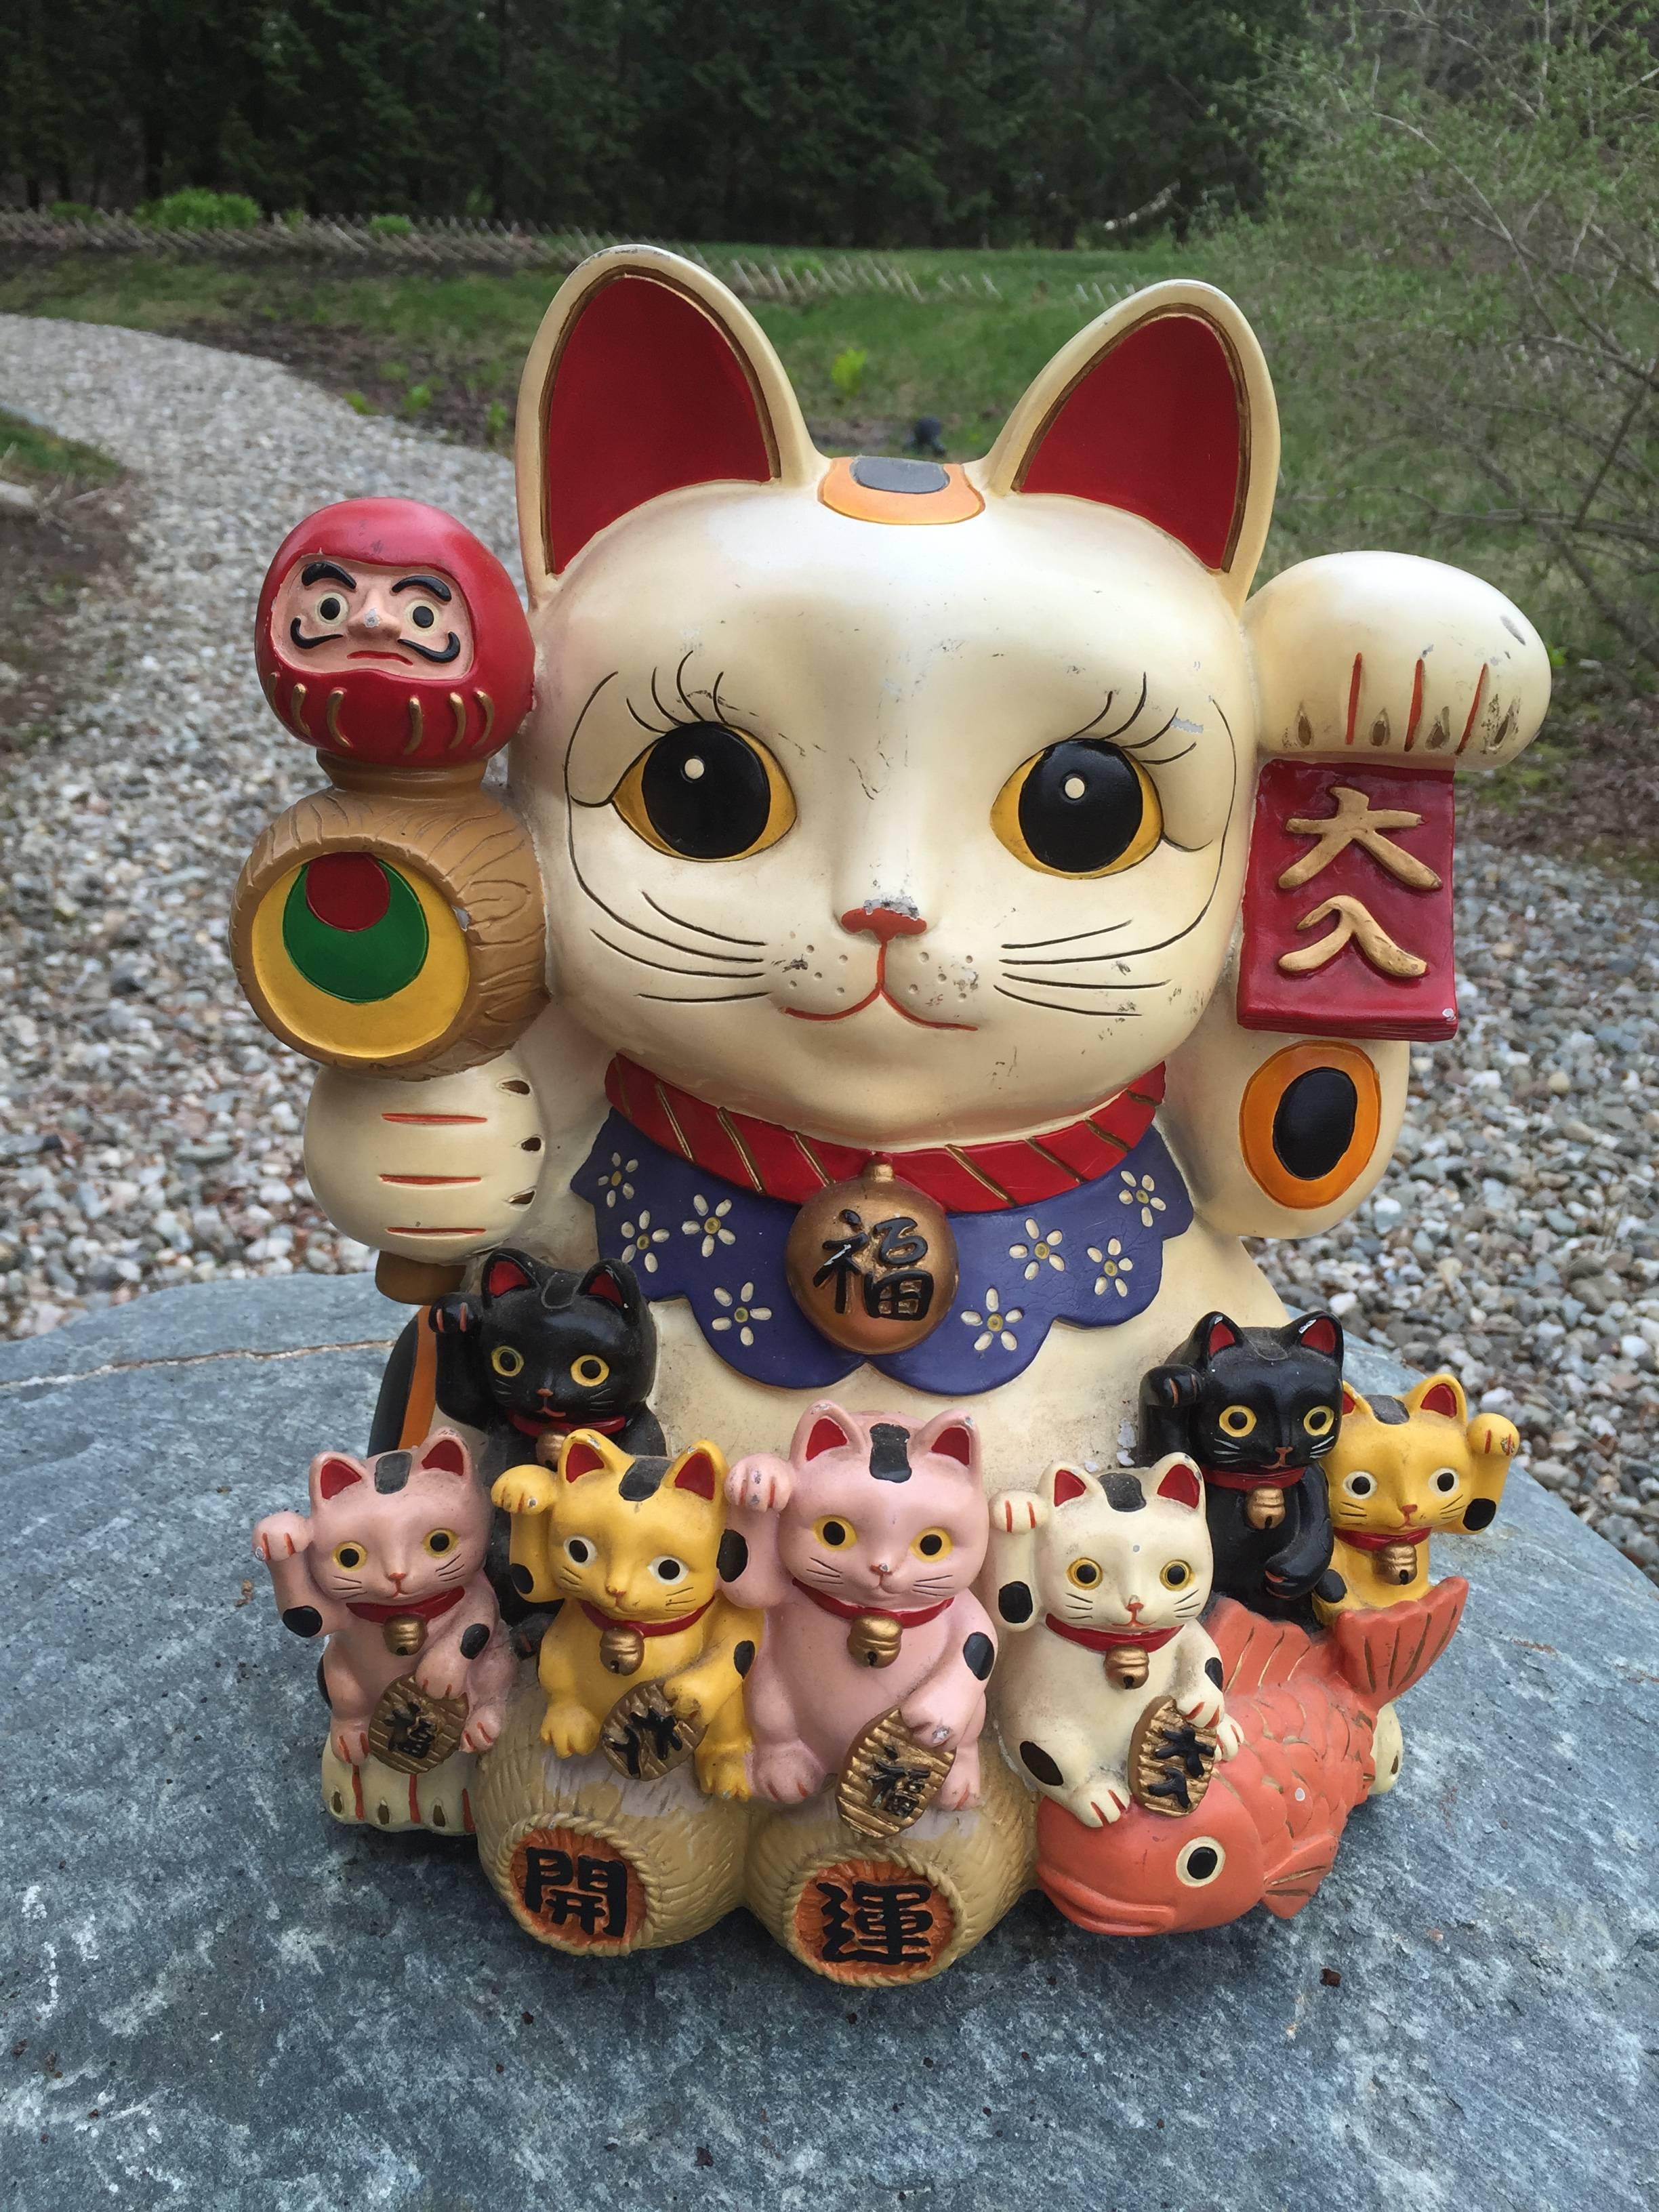 Japan, you may choose one of this  lovely monumental pair of old ceramic Maneki neko 